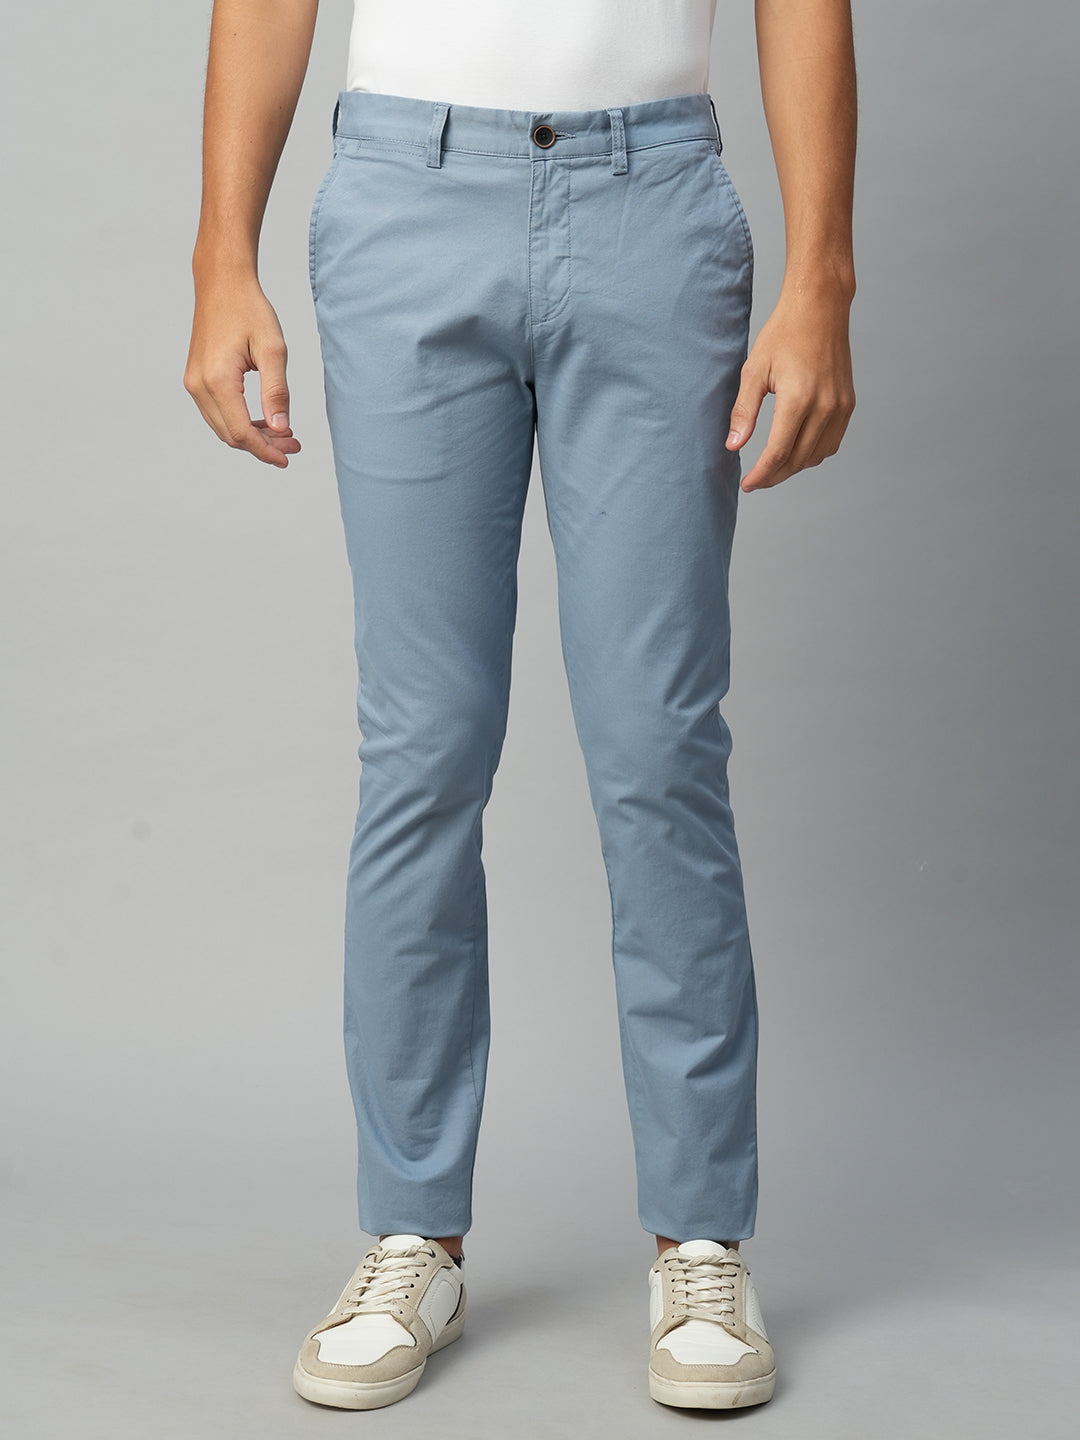 Men's Greyish Blue Cotton Lycra  Slim Fit Pant